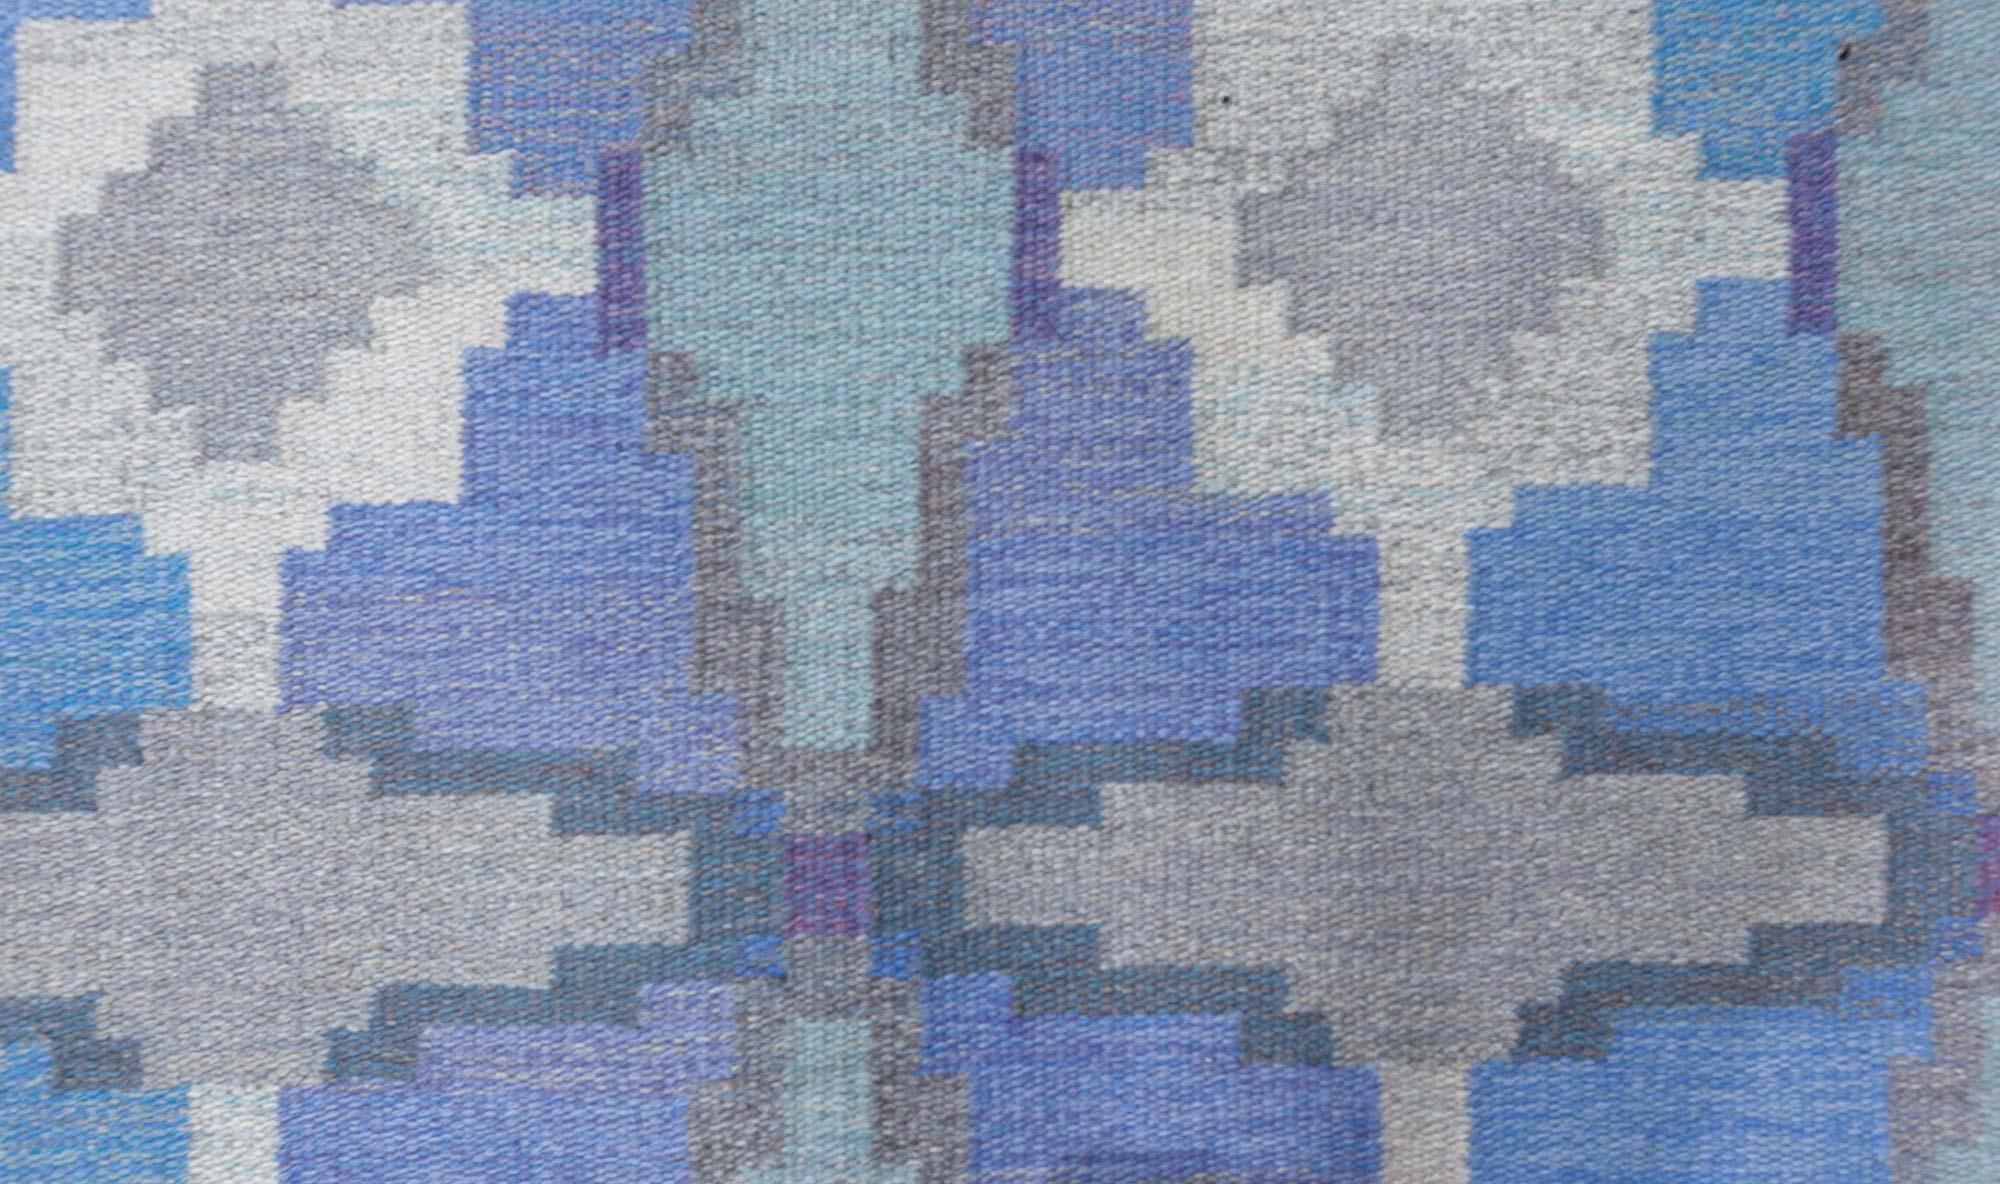 Vintage Swedish flat woven rug by Judith Johansson
Size: 6'8